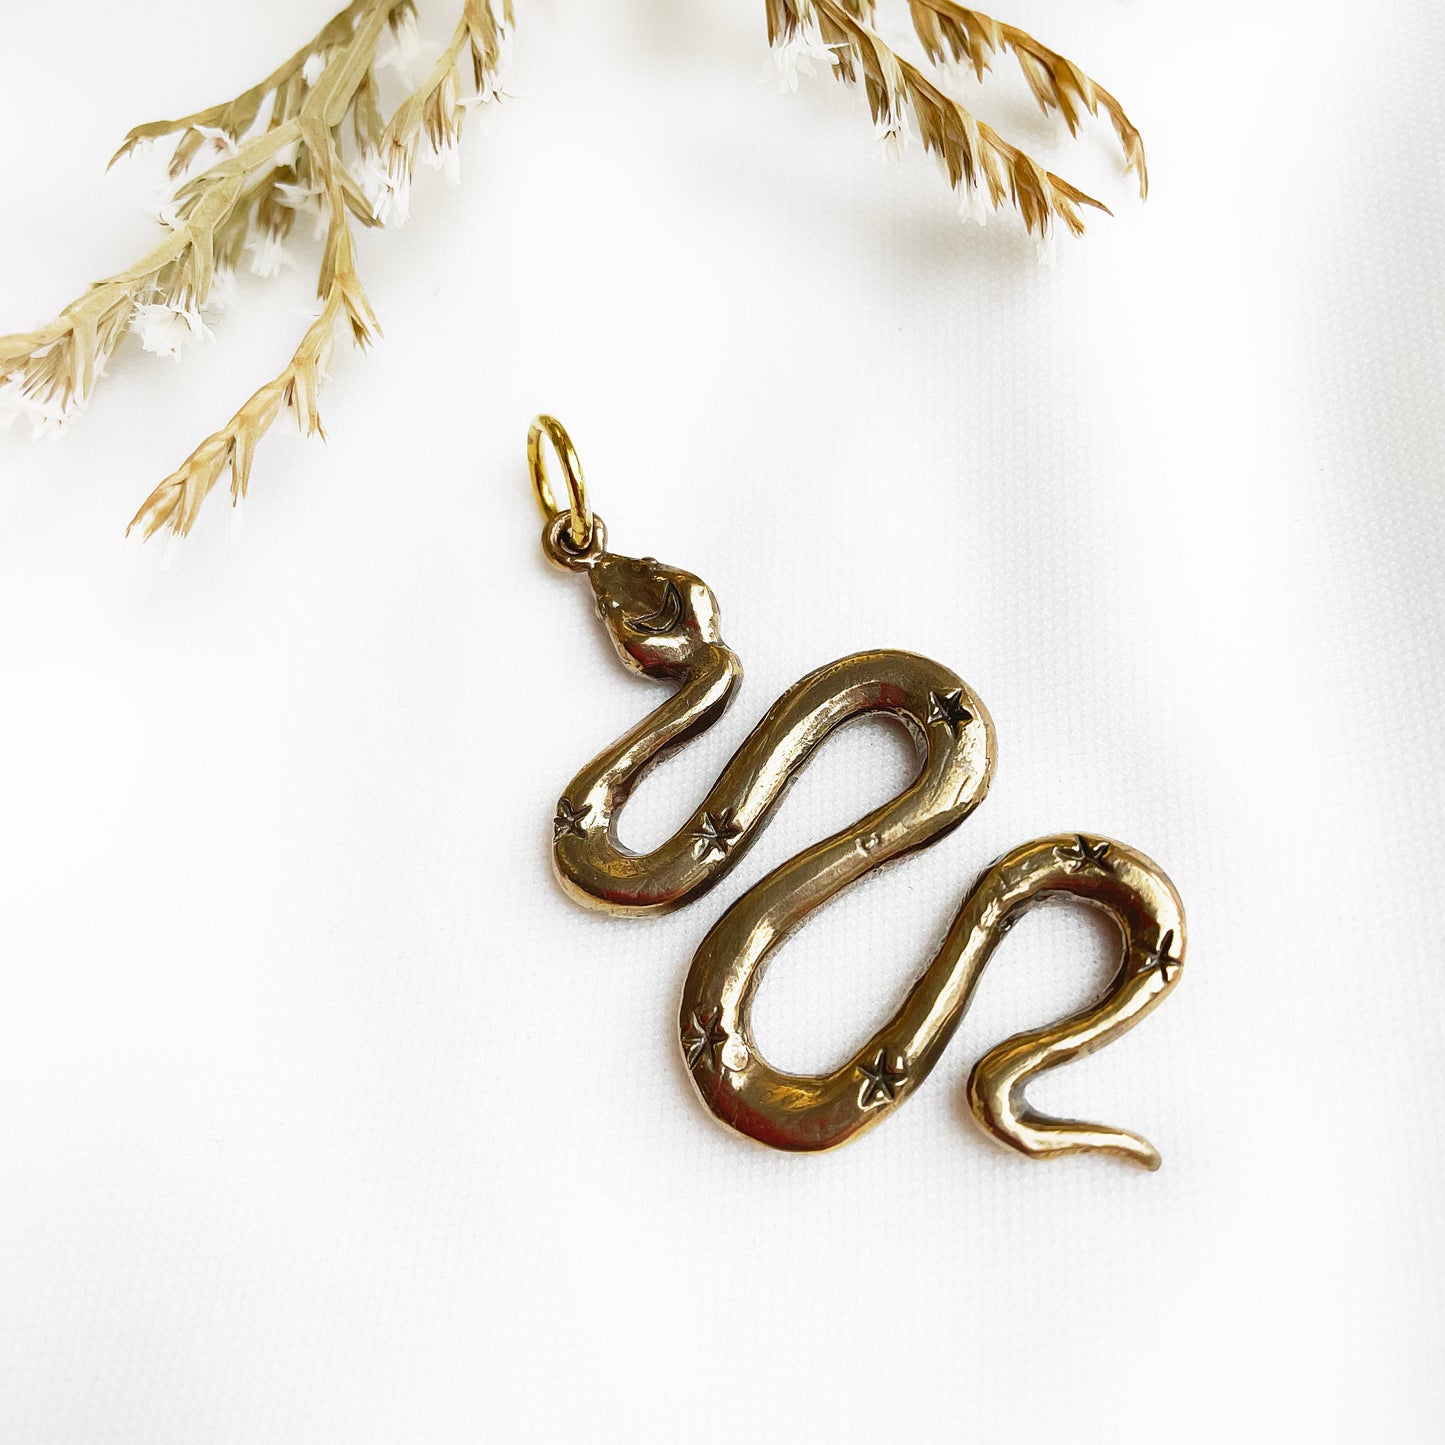 Snake Pendant | Sterling Silver "Serpens" Charm